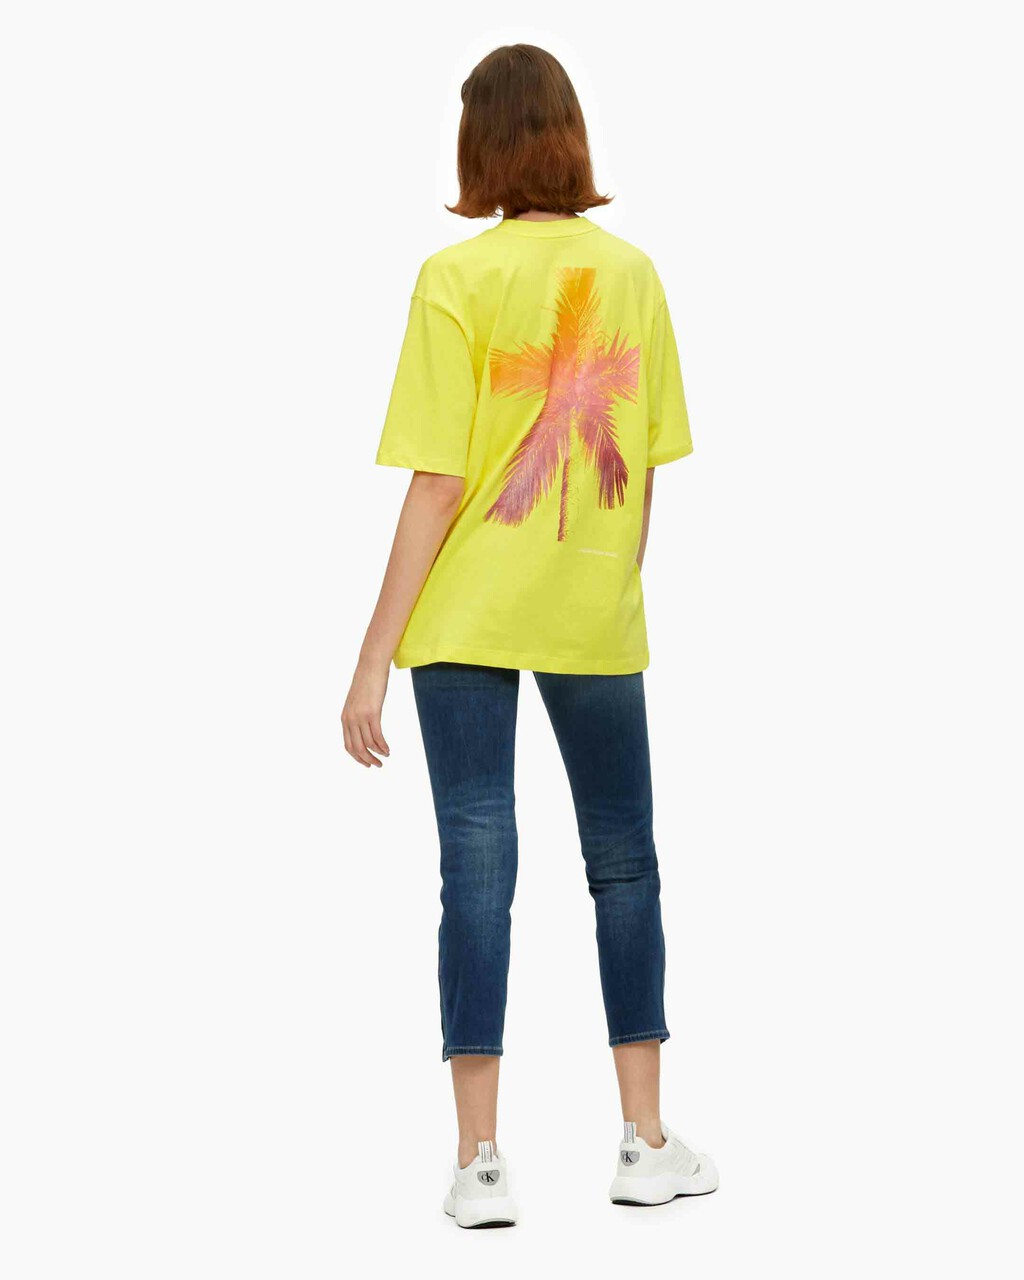 Escape 漸層棕櫚印花 T 恤, Bright Sunshine, hi-res